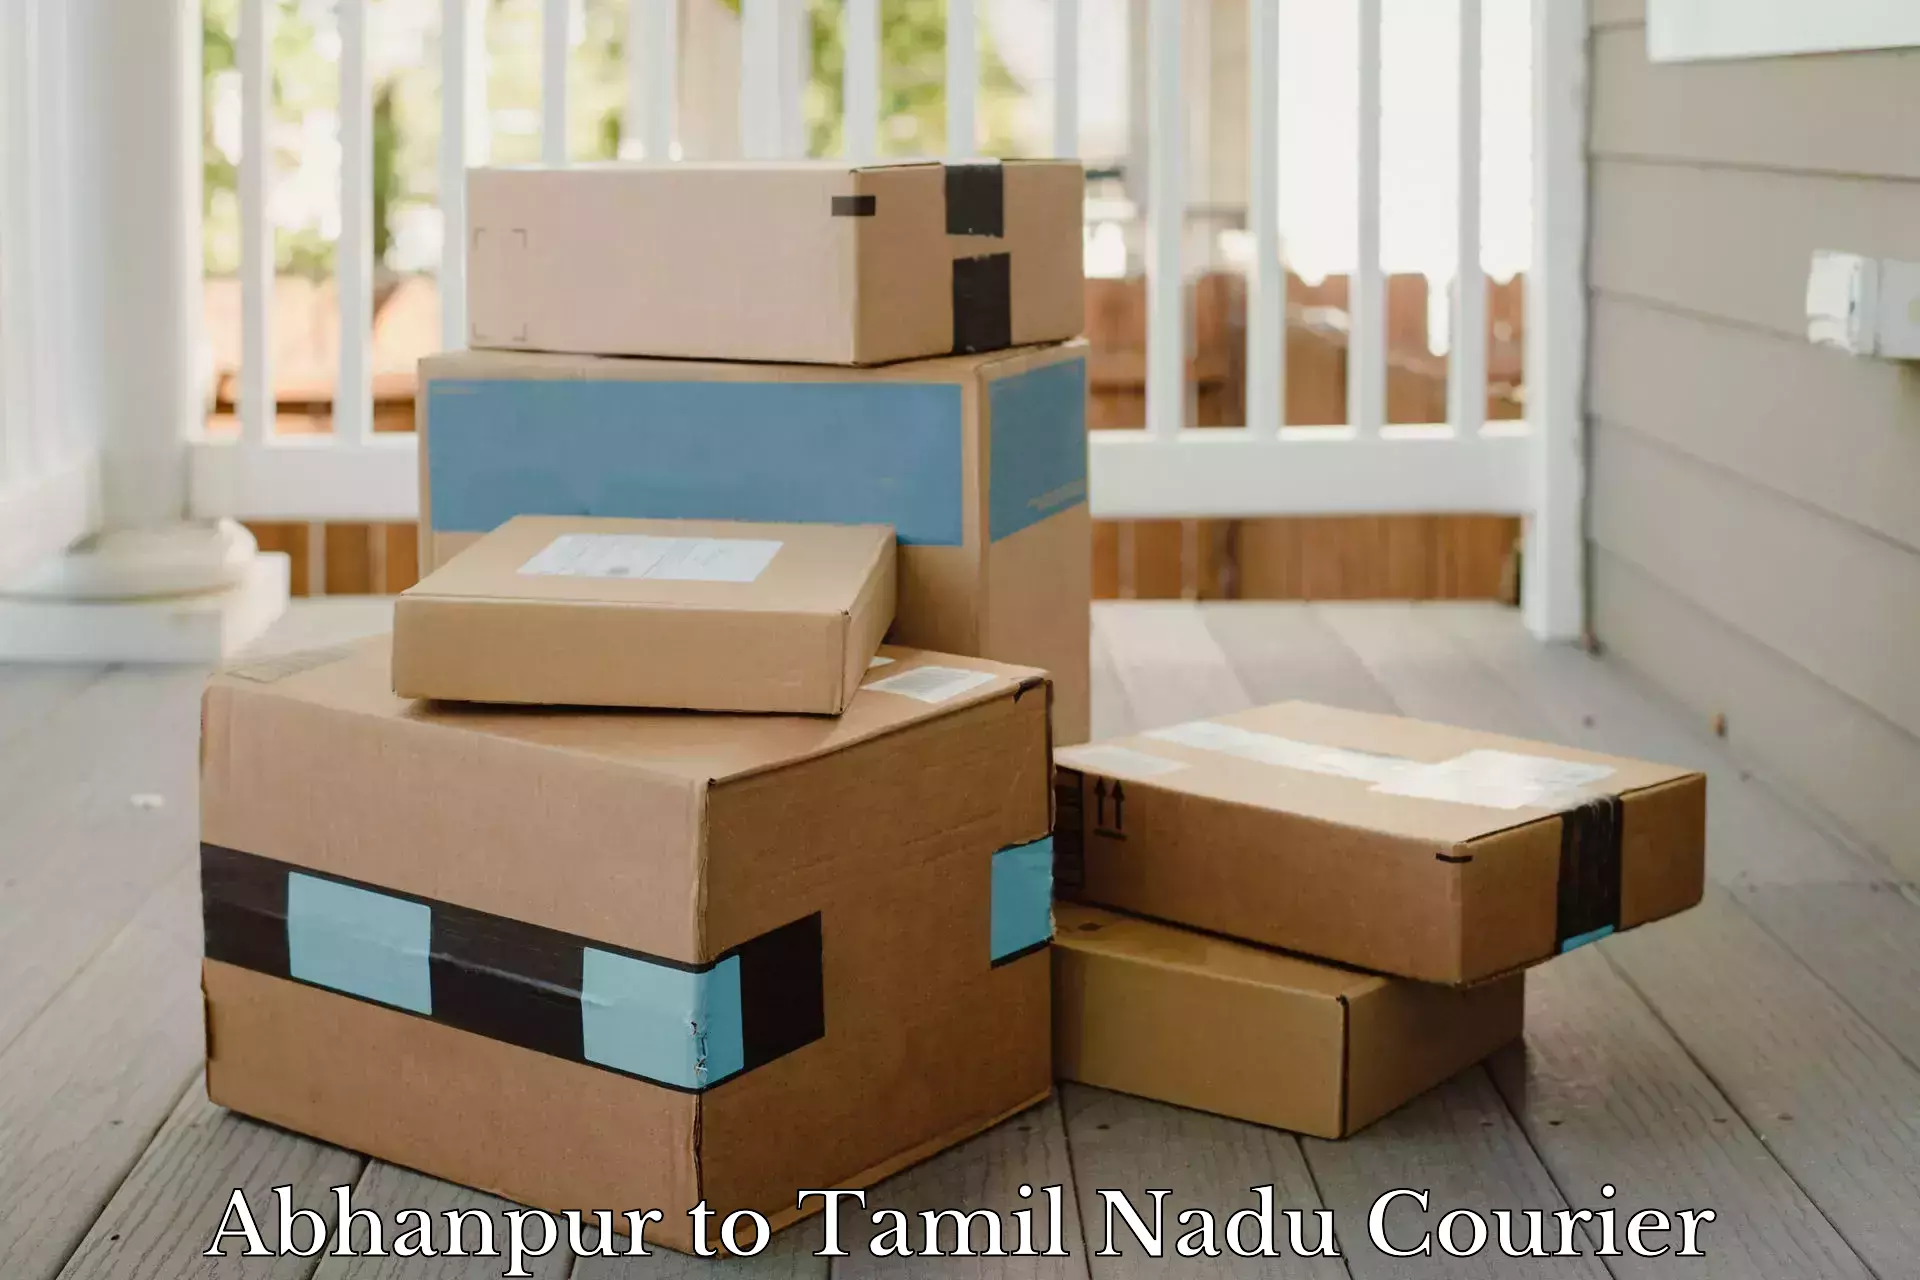 Supply chain efficiency Abhanpur to Tamil Nadu